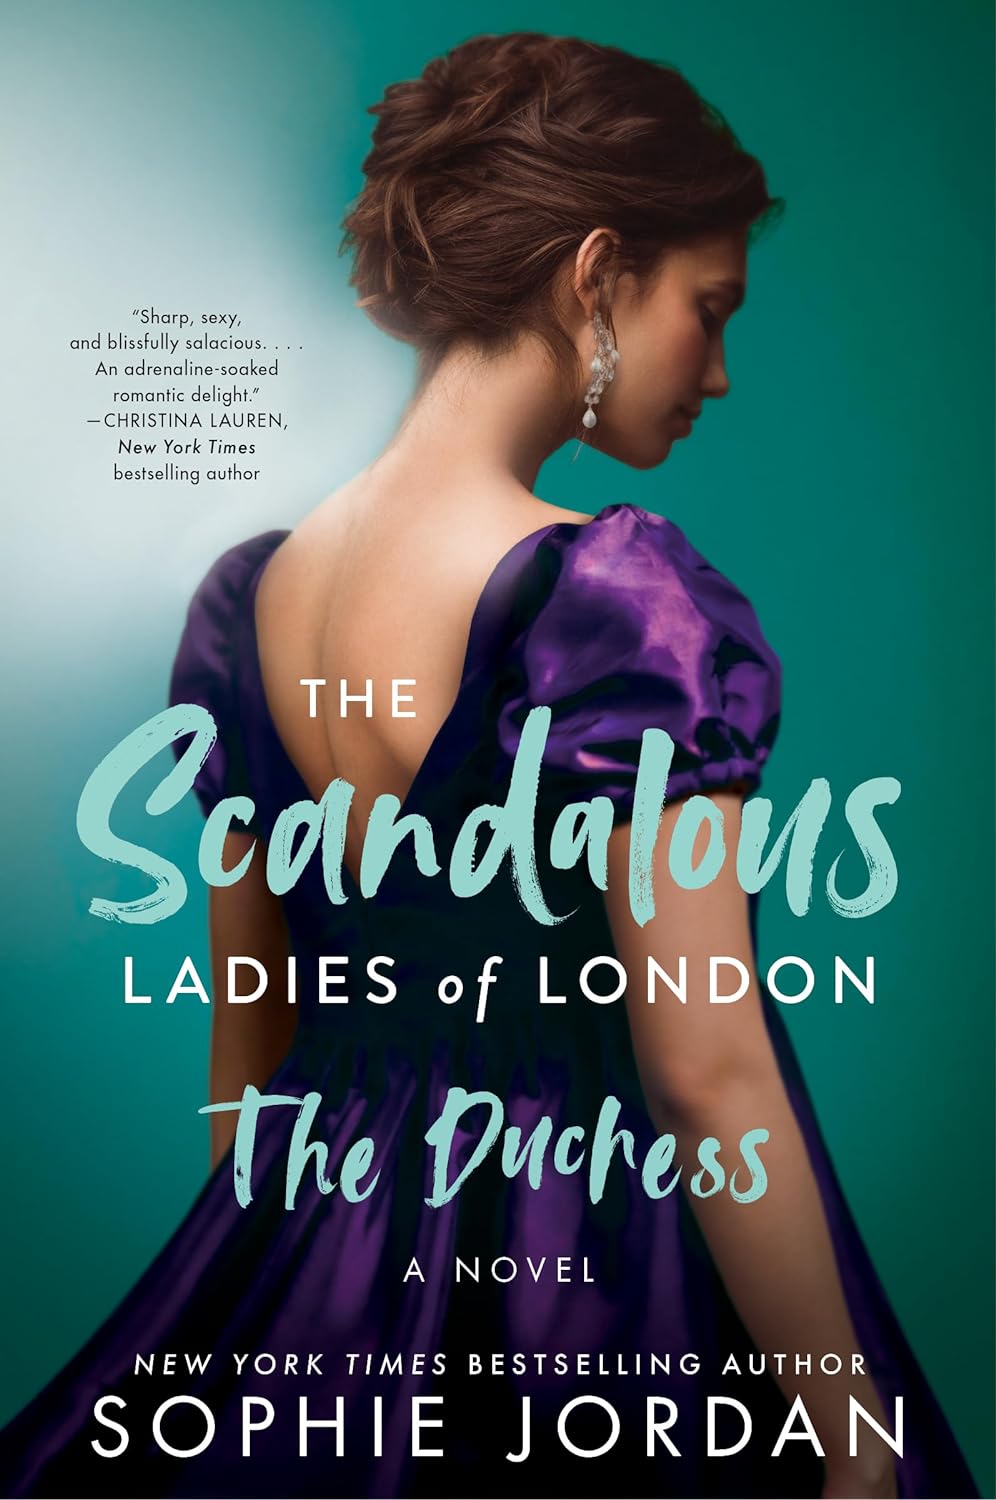 The Duchess: Scandalous Ladies of London by Sophie Jordan